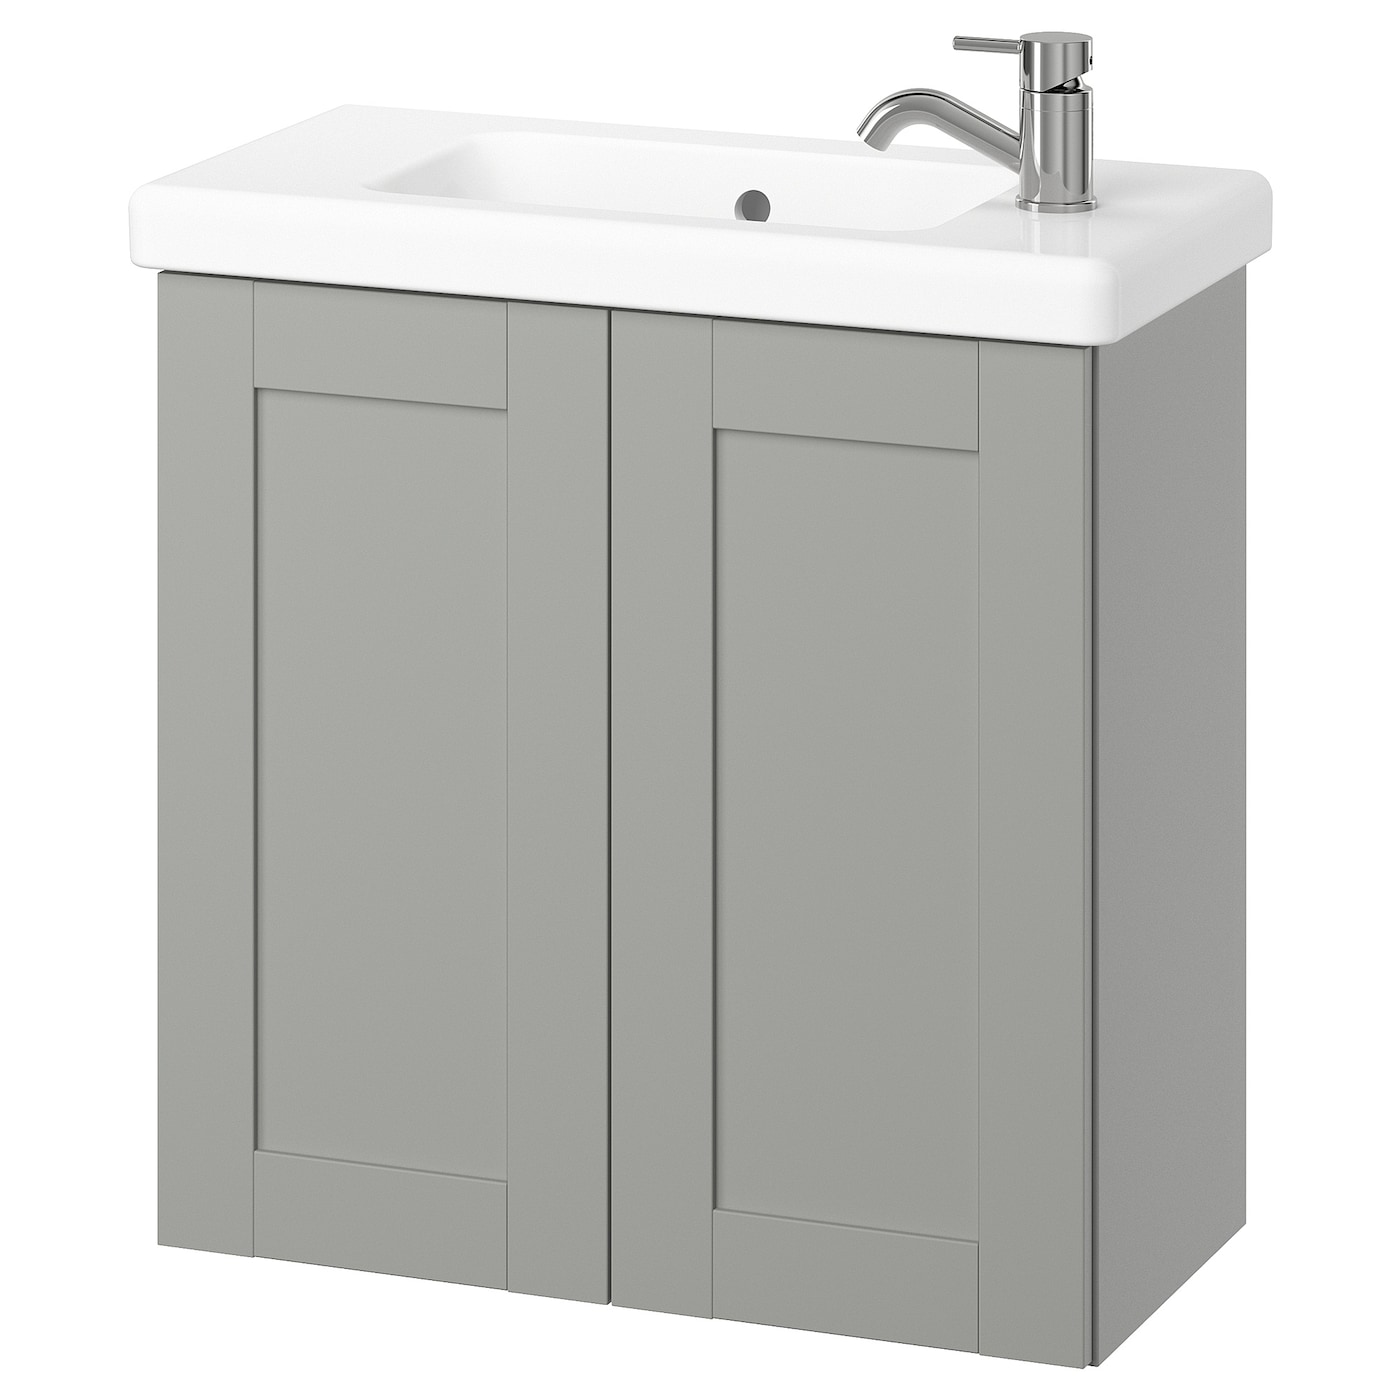 Тумба для ванной - ENHET / TVÄLLEN  /TVАLLEN  IKEA/ ЭНХЕТ / ТВЭЛЛЕН ИКЕА,  64х33х65 см , белый/серый